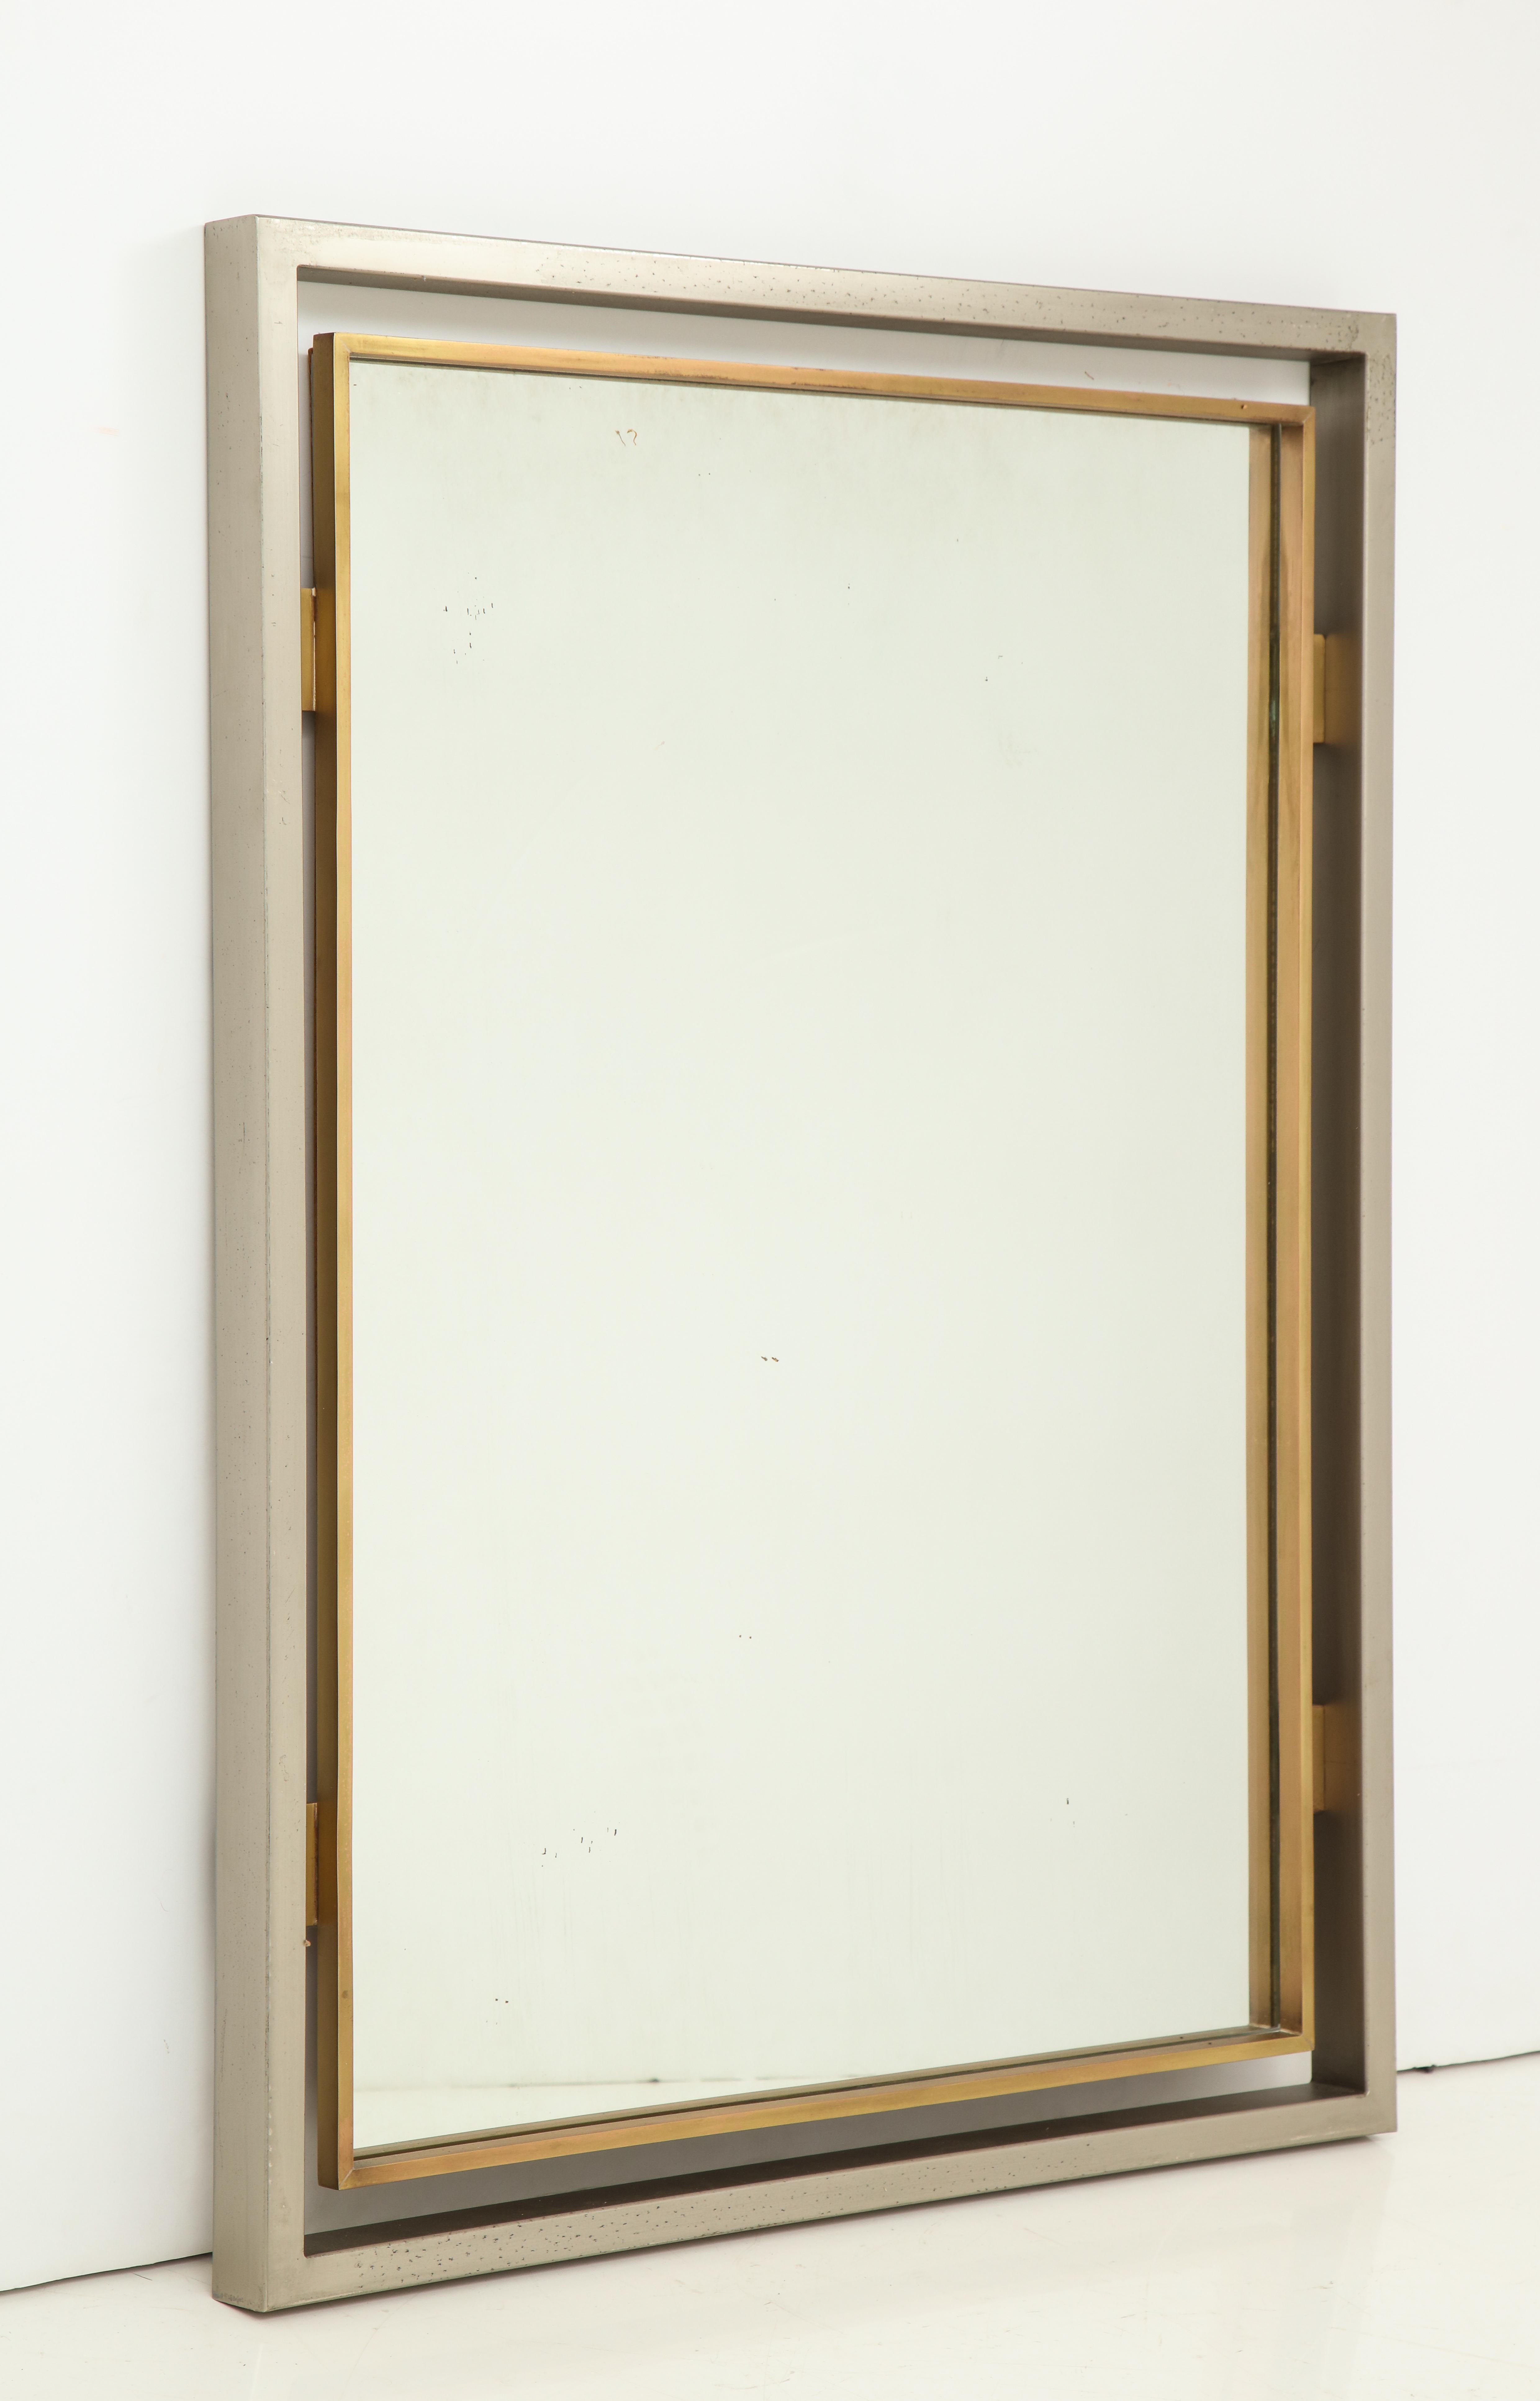 Solid steel and brass elegant mirror by Guy Lefevre for Maison Jansen
Rare
Minor spots on steel frame
Else in great vintage condition.
 